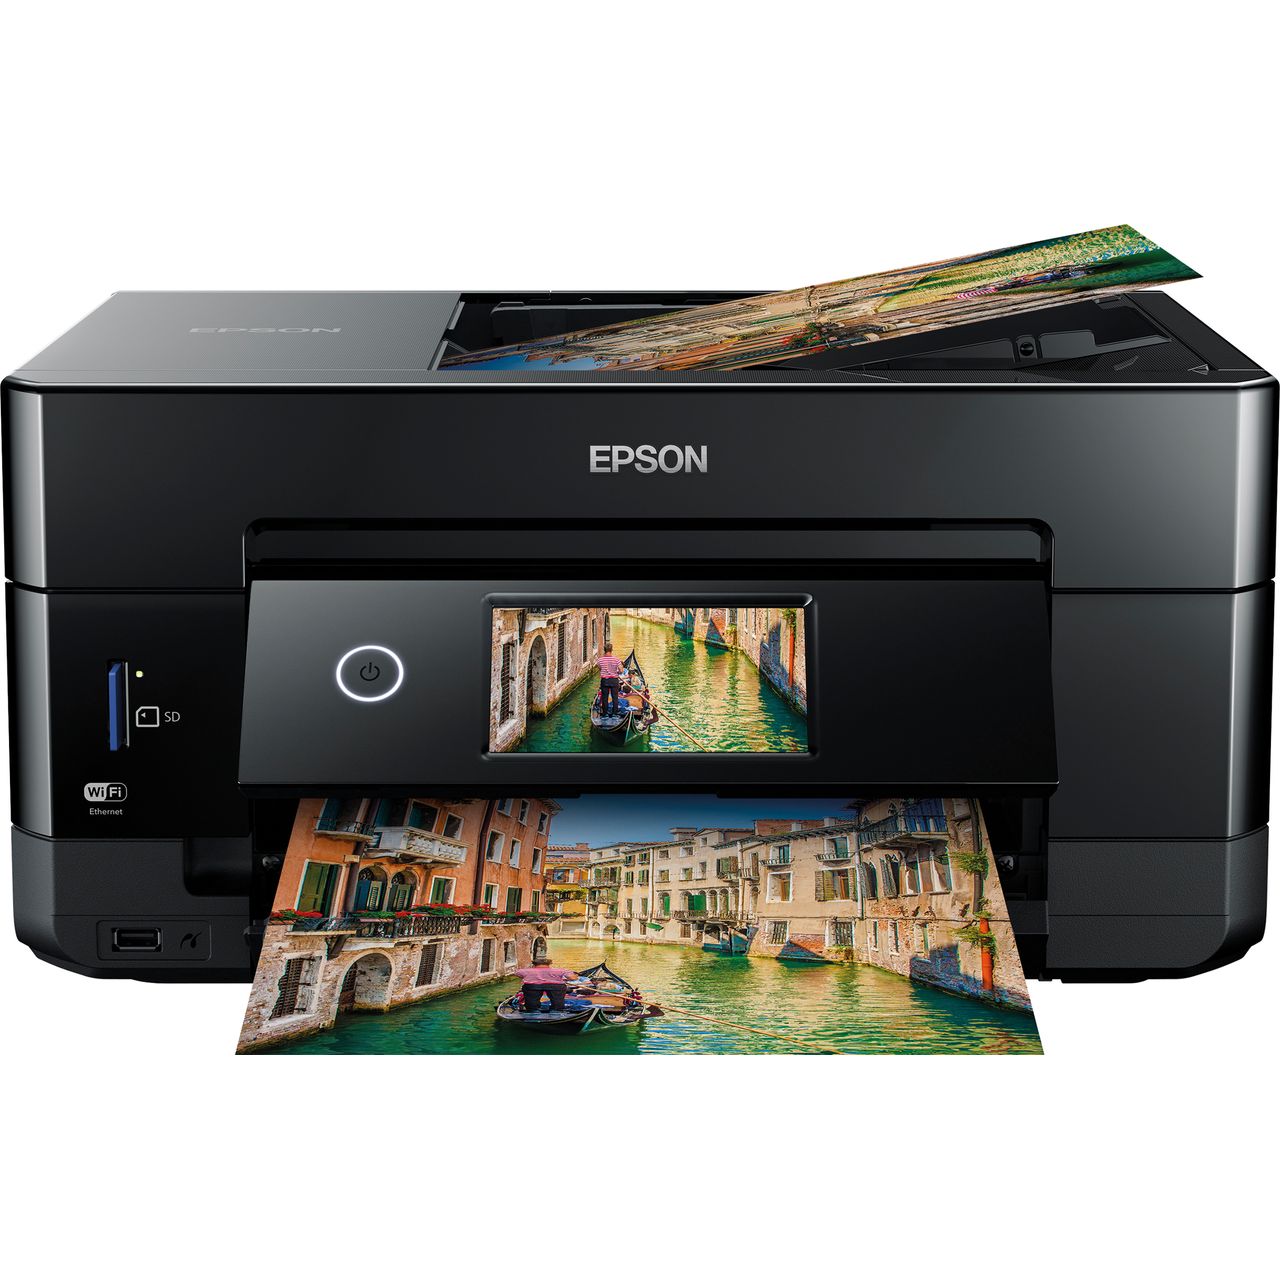 Epson Expression Premium XP-7100 Inkjet Printer Review